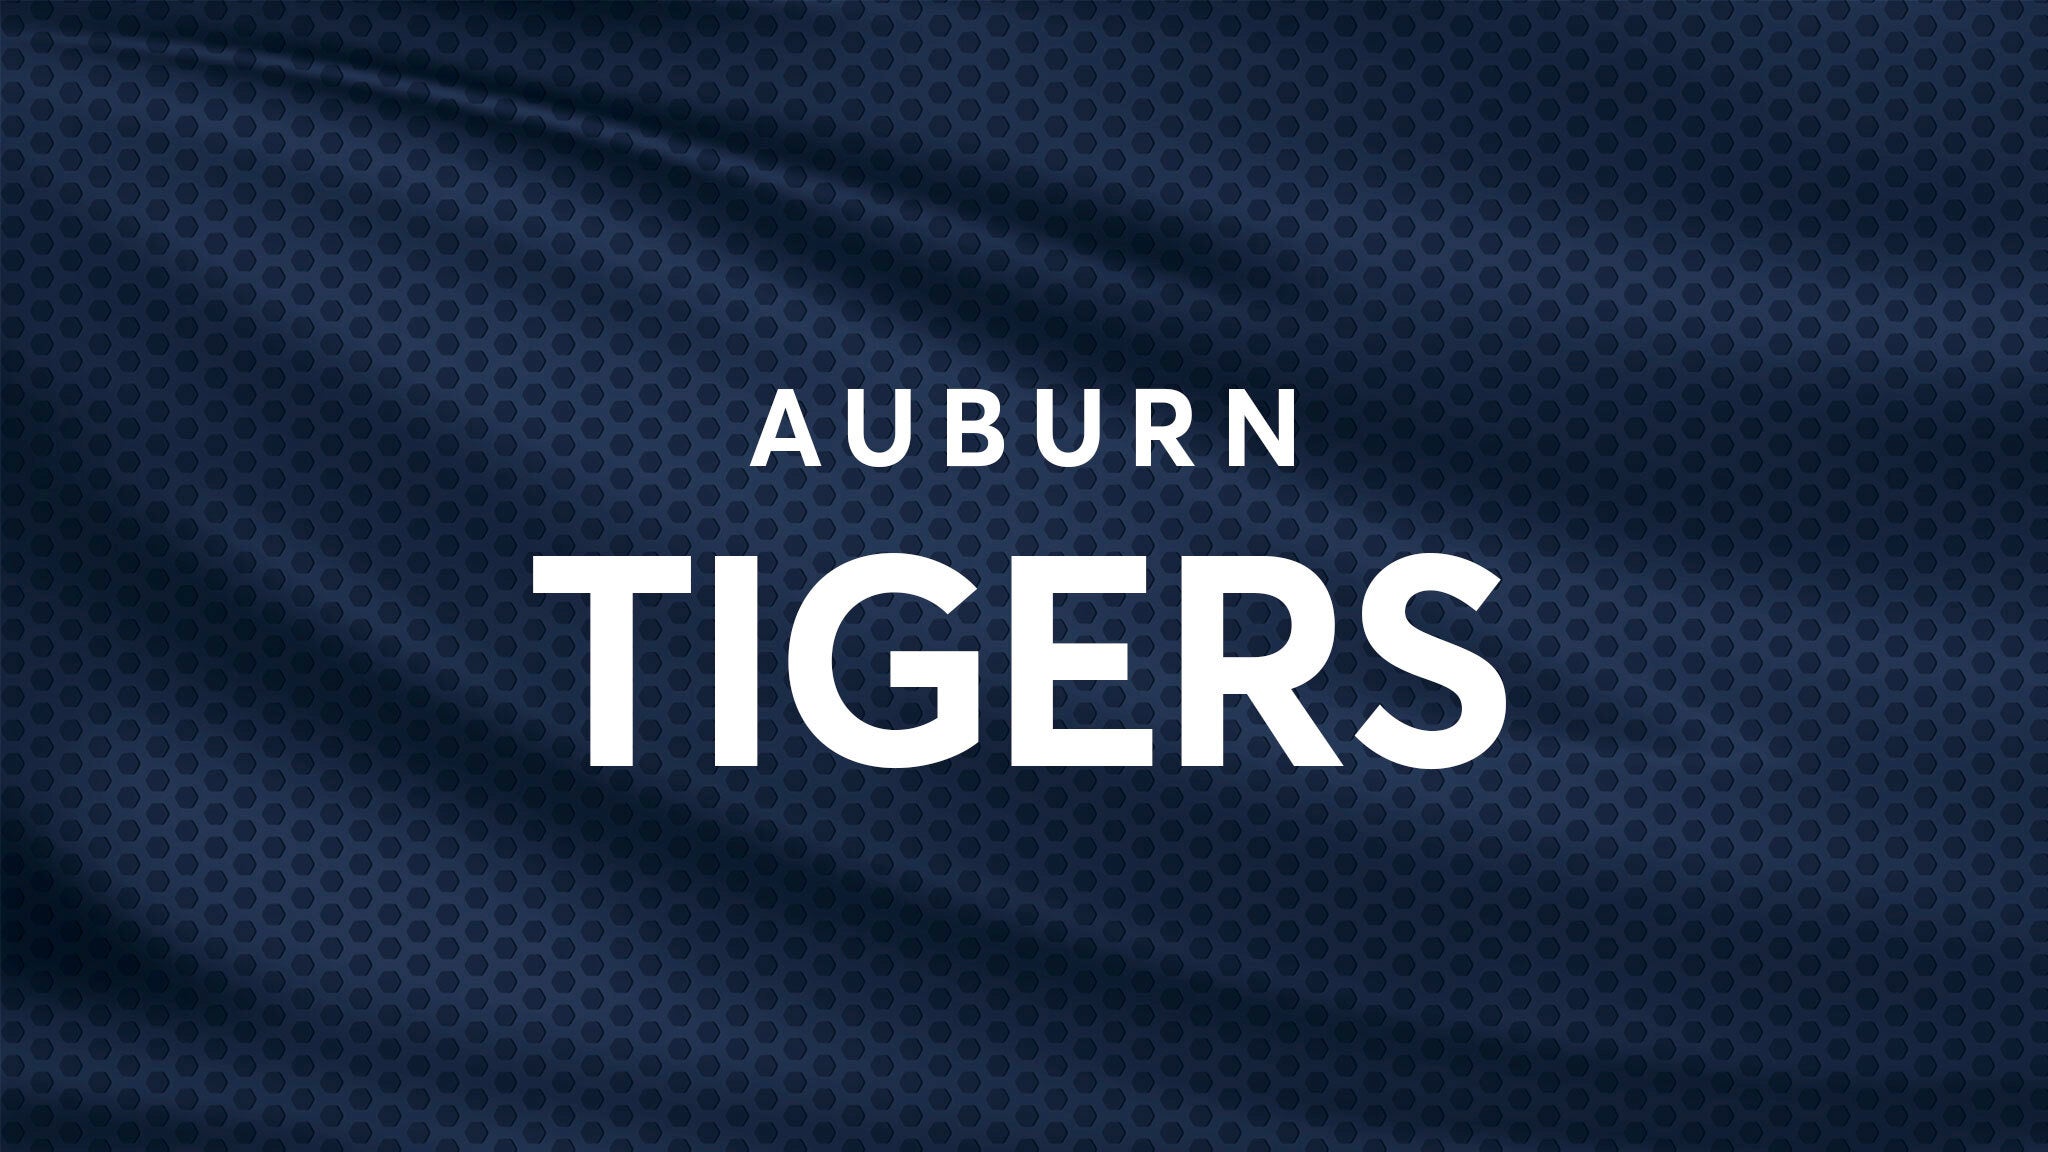 Auburn Tigers Football vs. Texas A&M Aggies Football hero